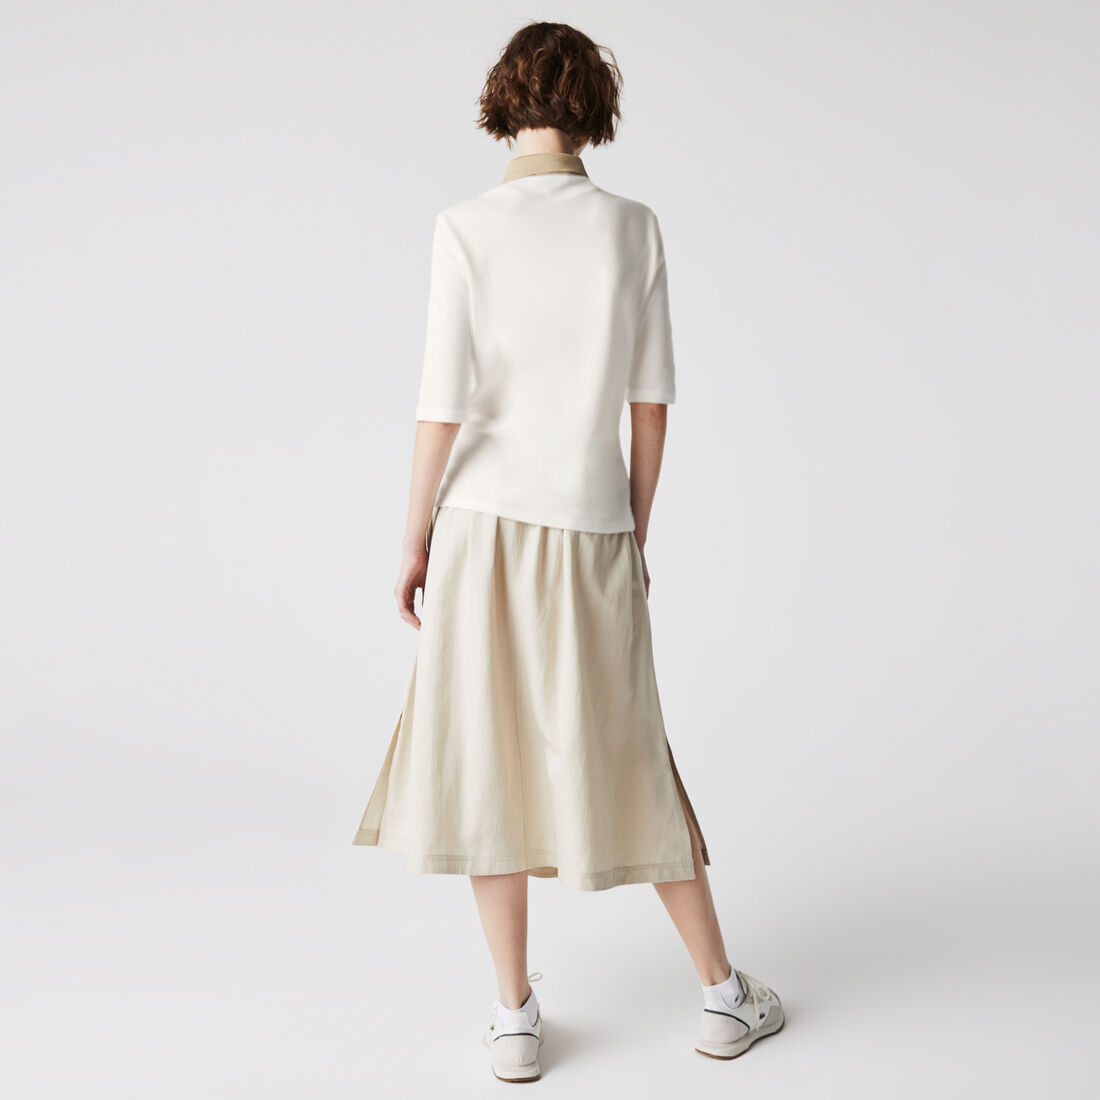 Lacoste Slim Fit Baumwoll Polo Shirts Damen Weiß | WPUN-61895